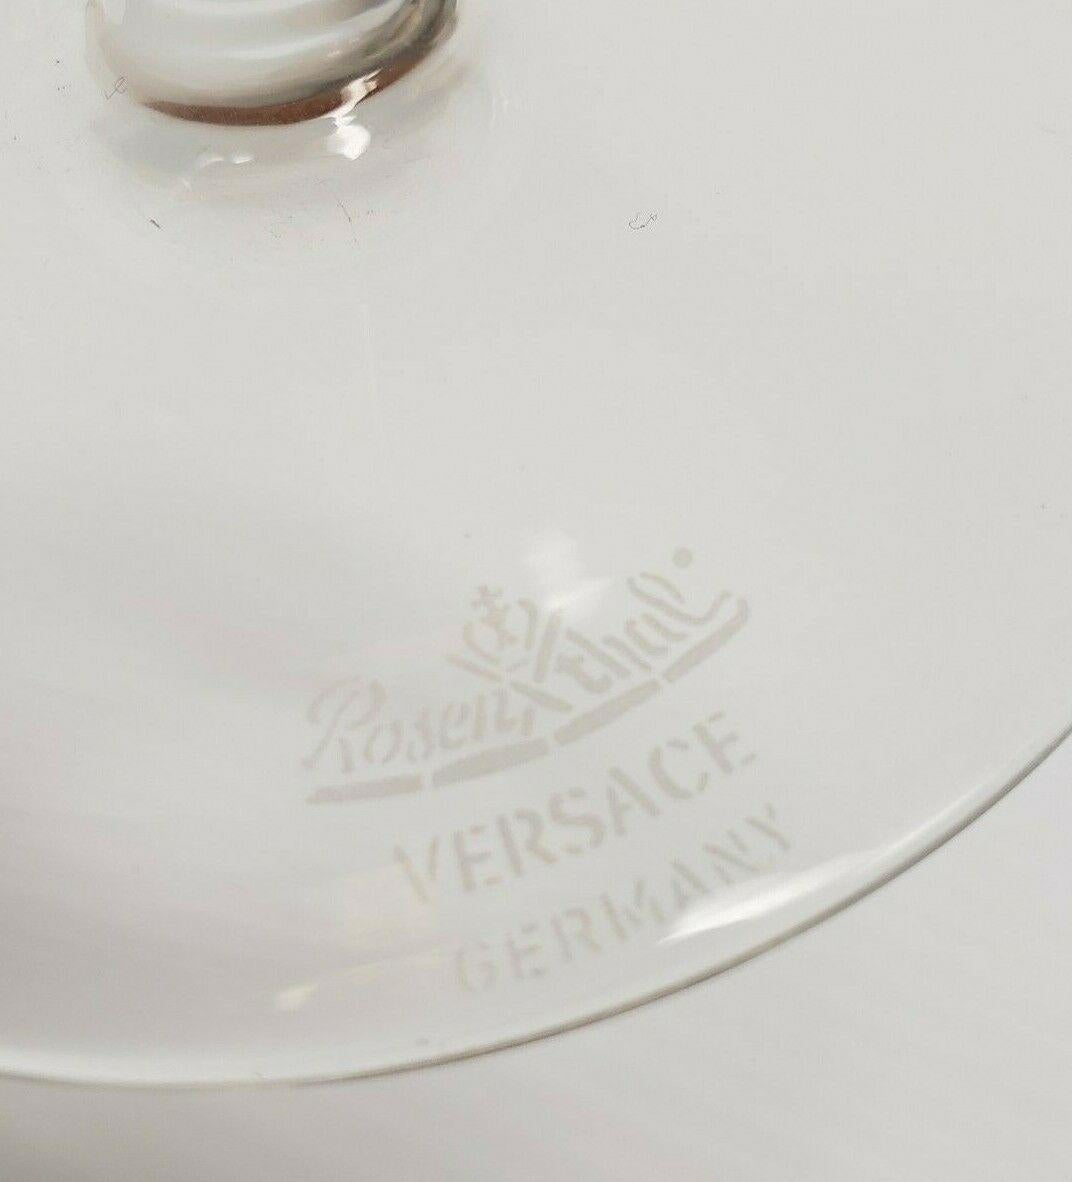 versace wine glasses